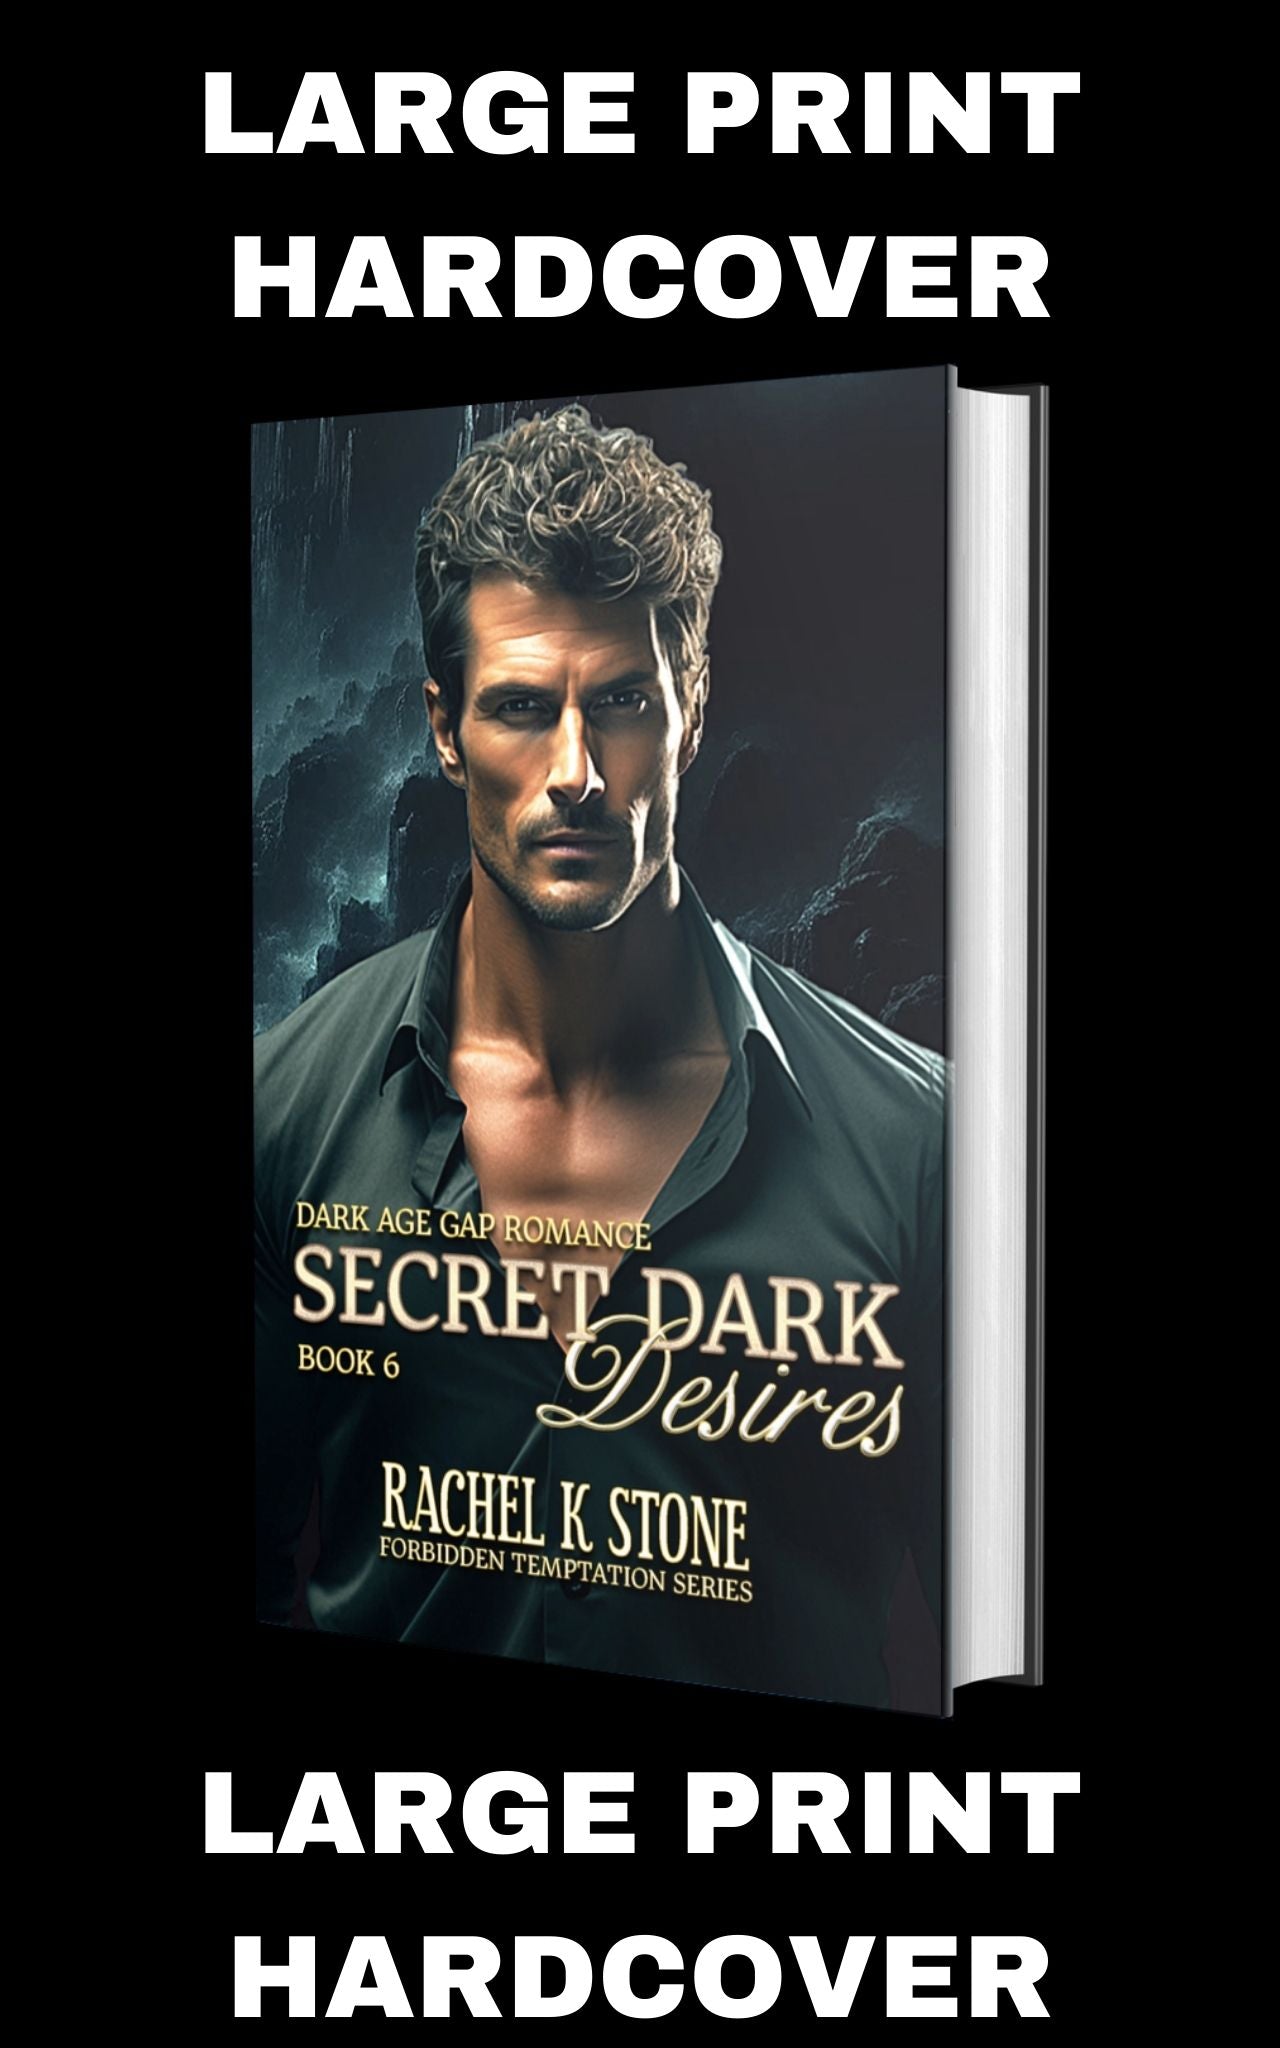  Secret Dark Desires: Age Gap Romance (Secrets Series, Book 6 - Large Print Hardcover)